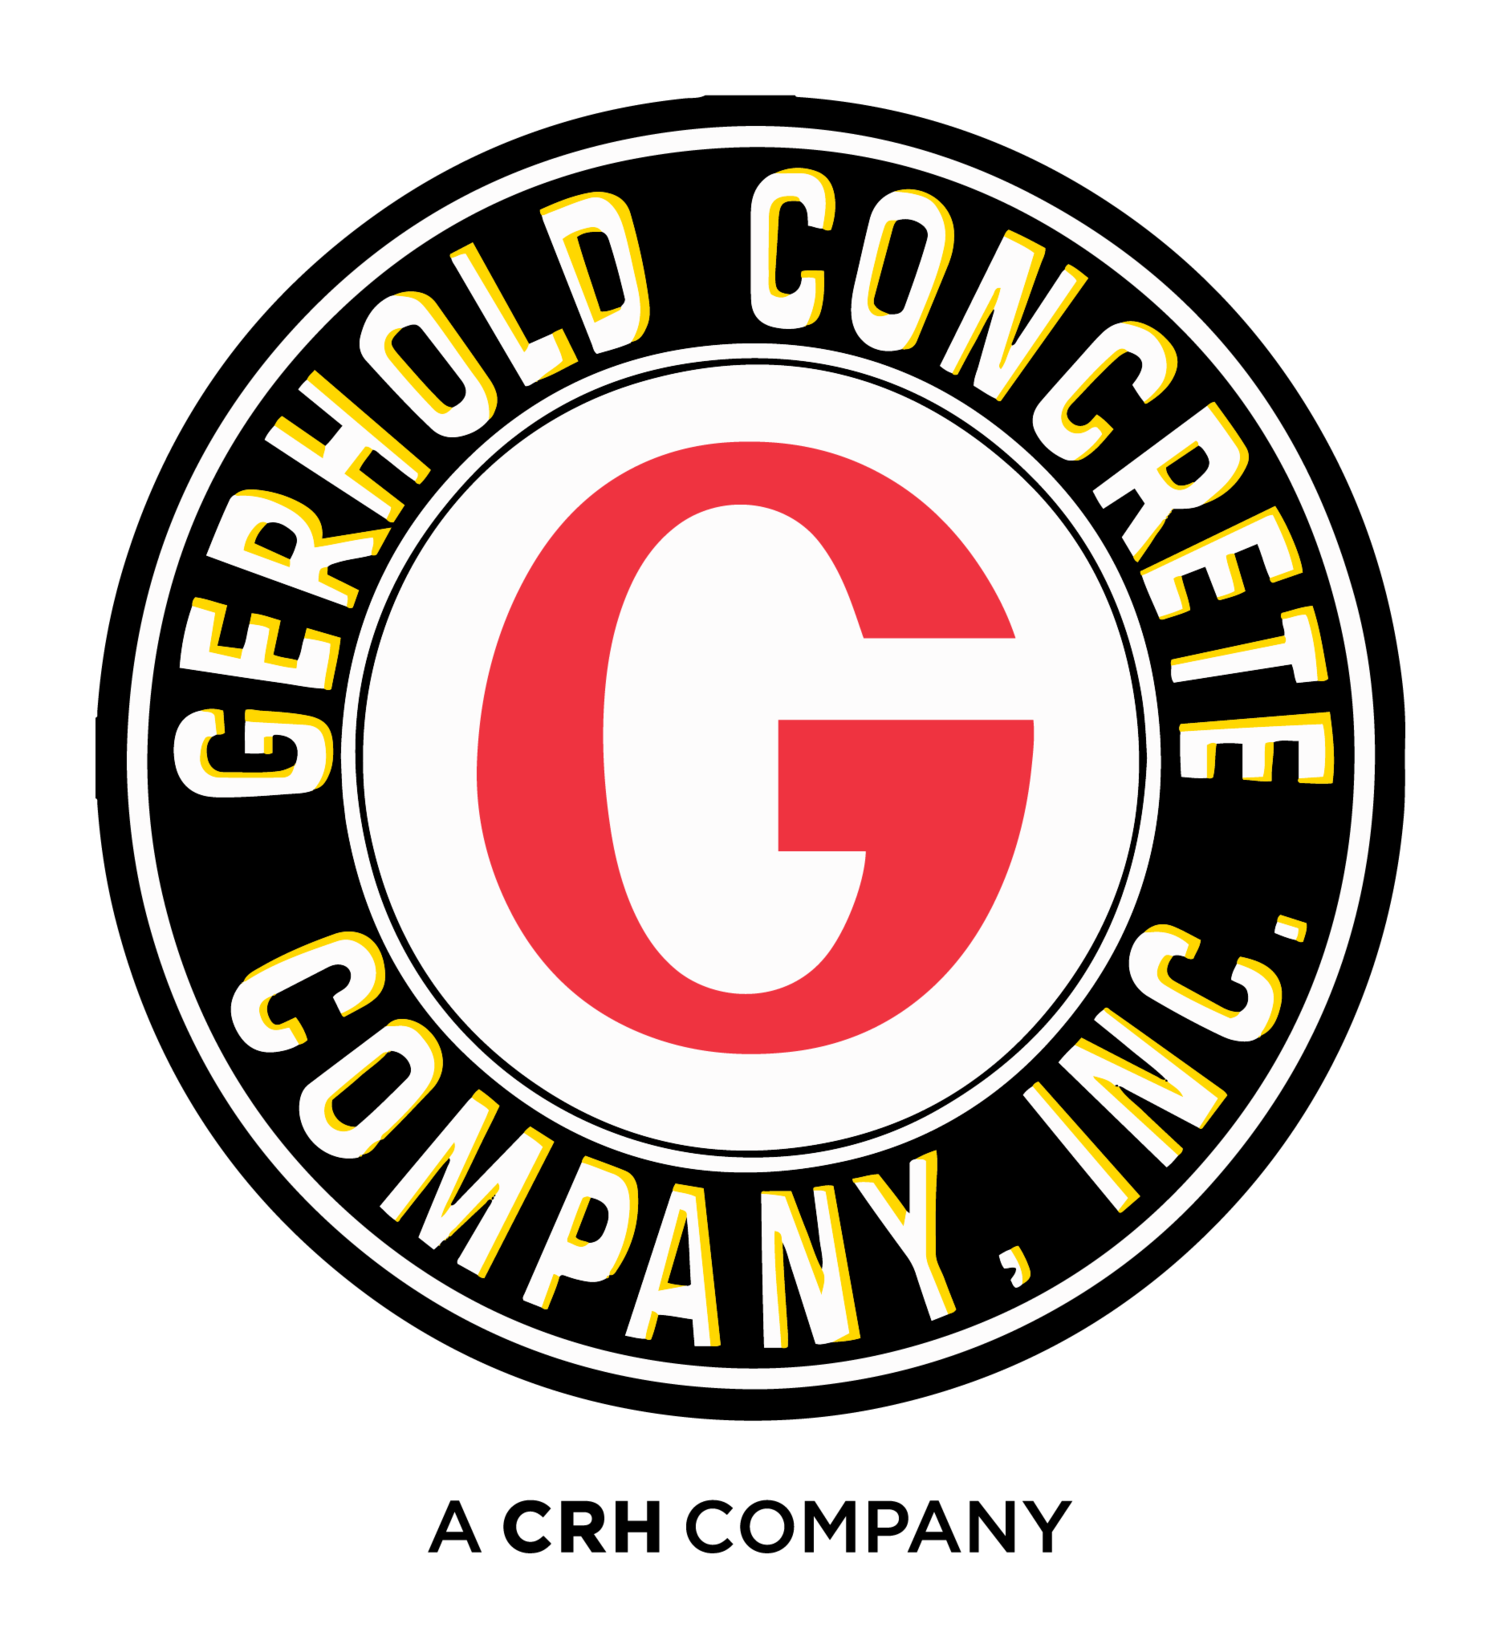 Gerhold Concrete Co